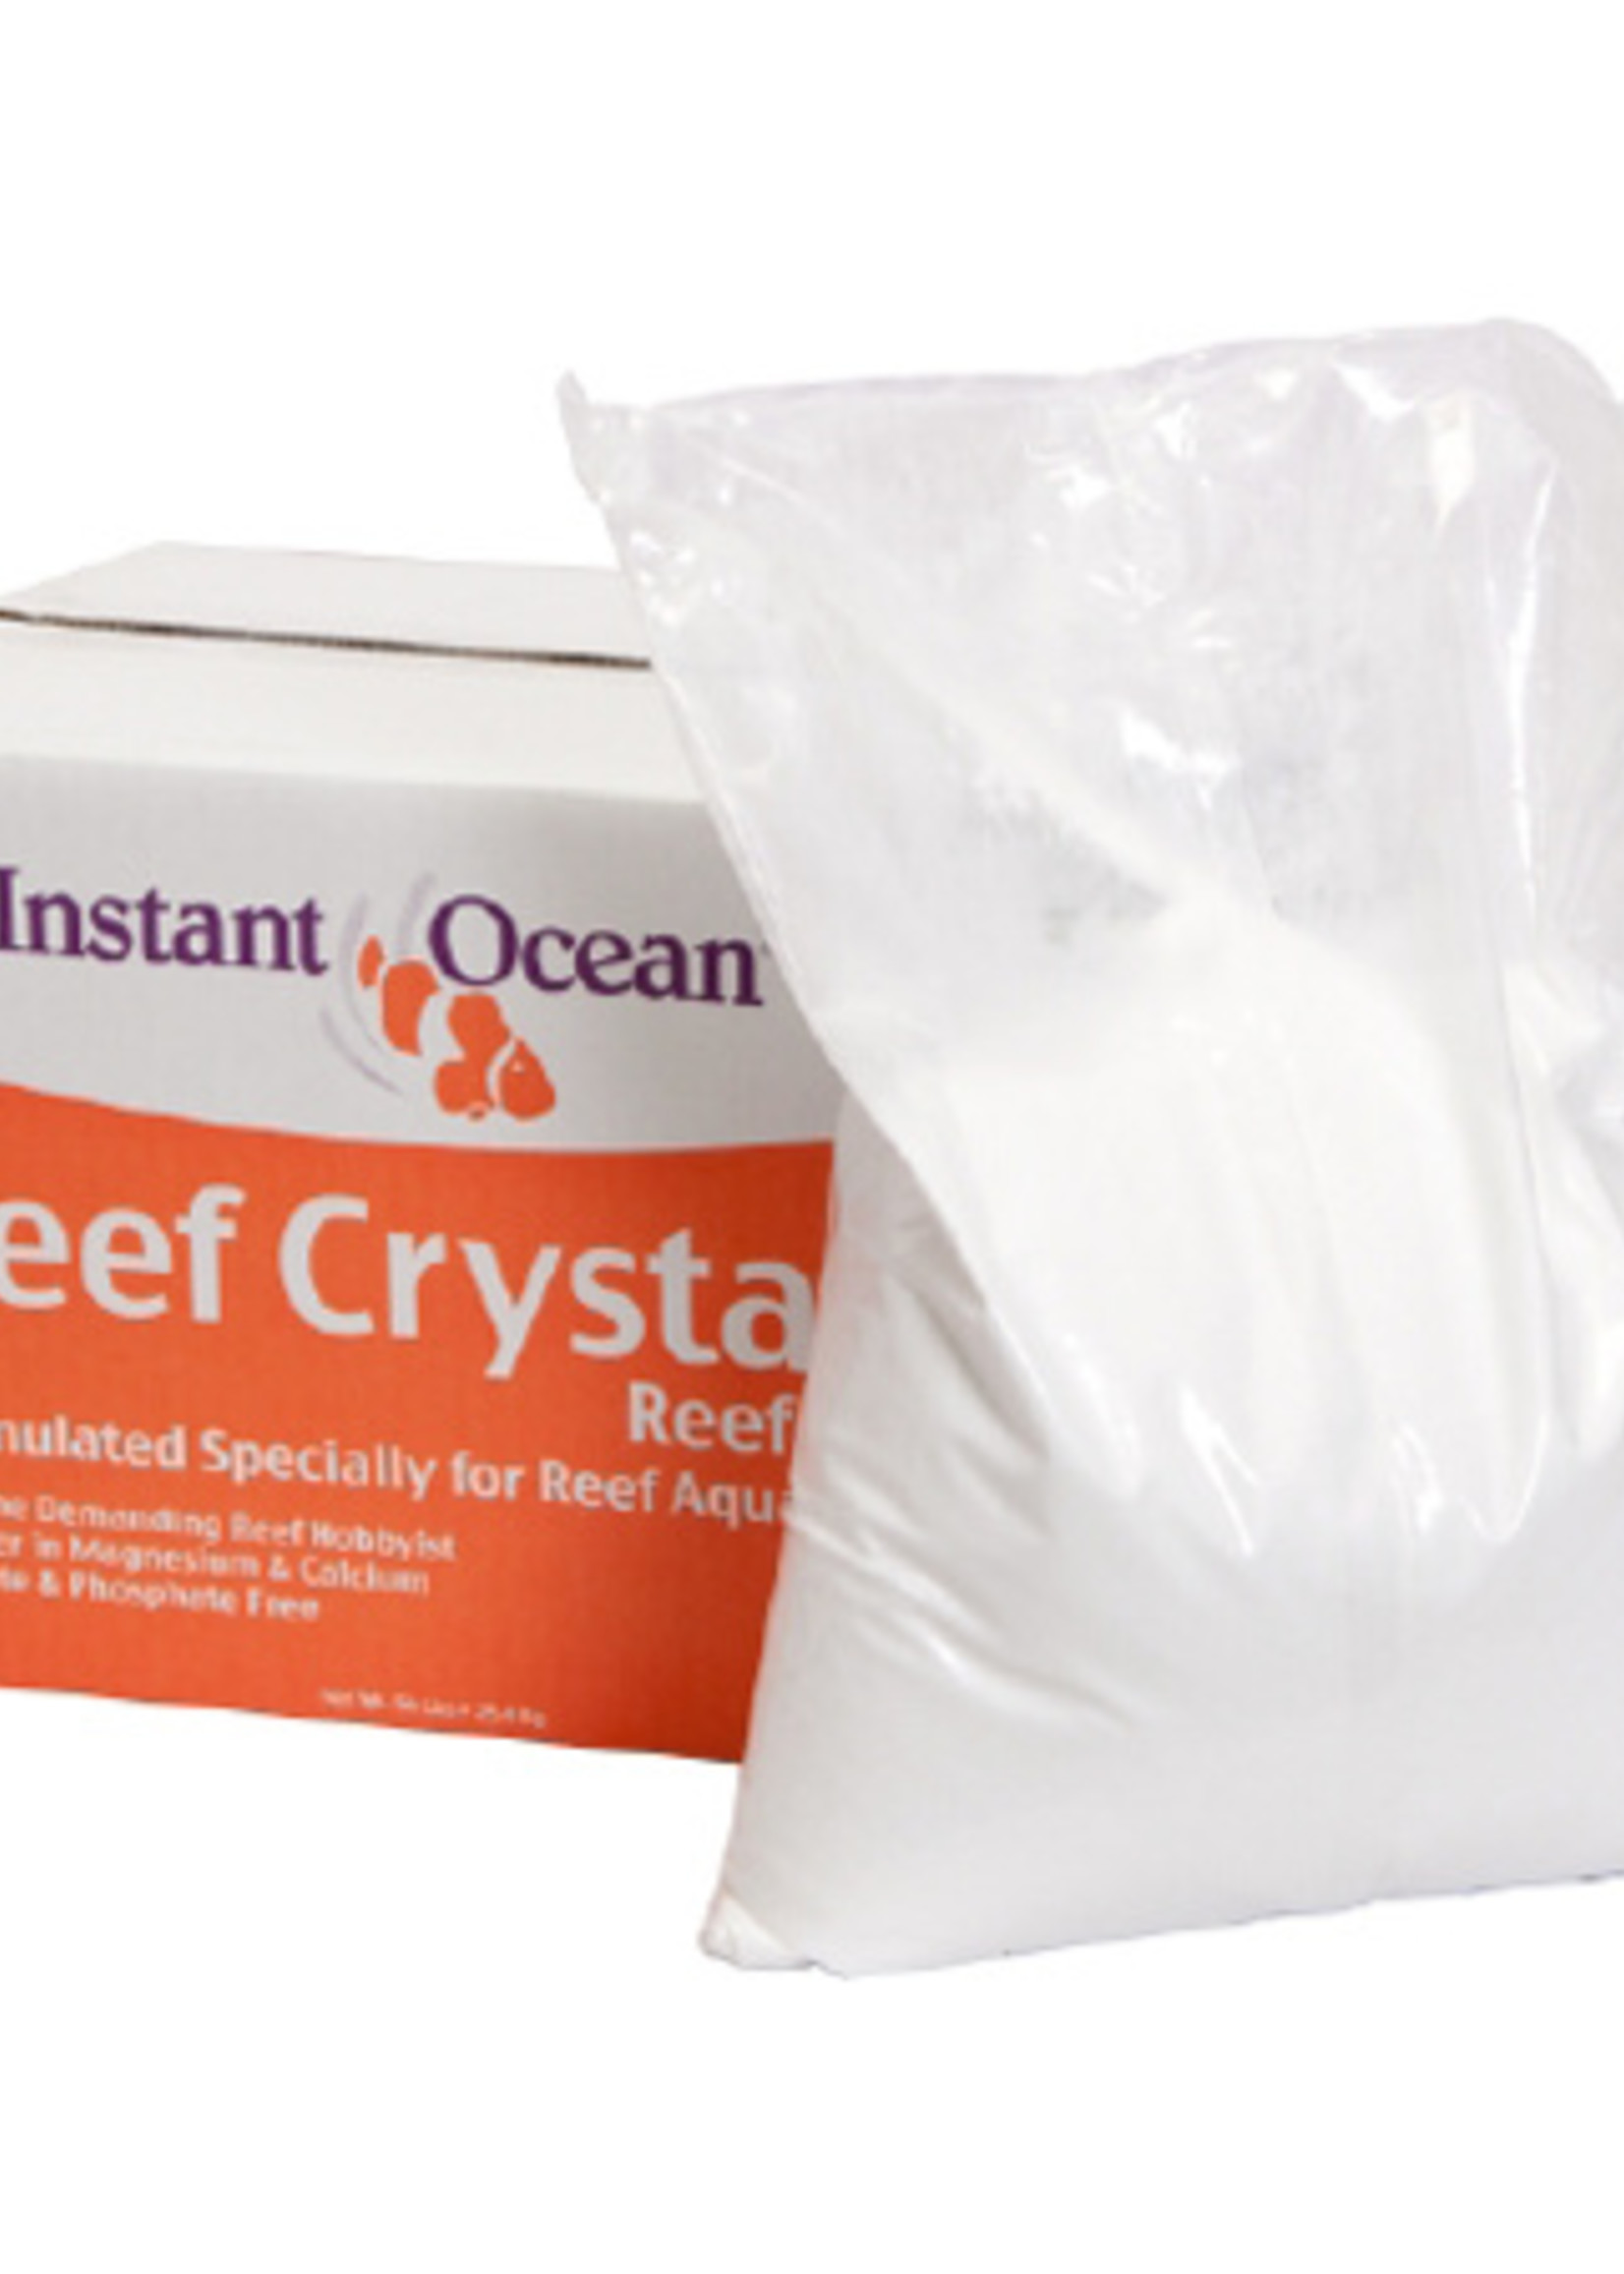 Instant ocean Instant Ocean Reef Crystals Reef Salt 200 Gallon Box